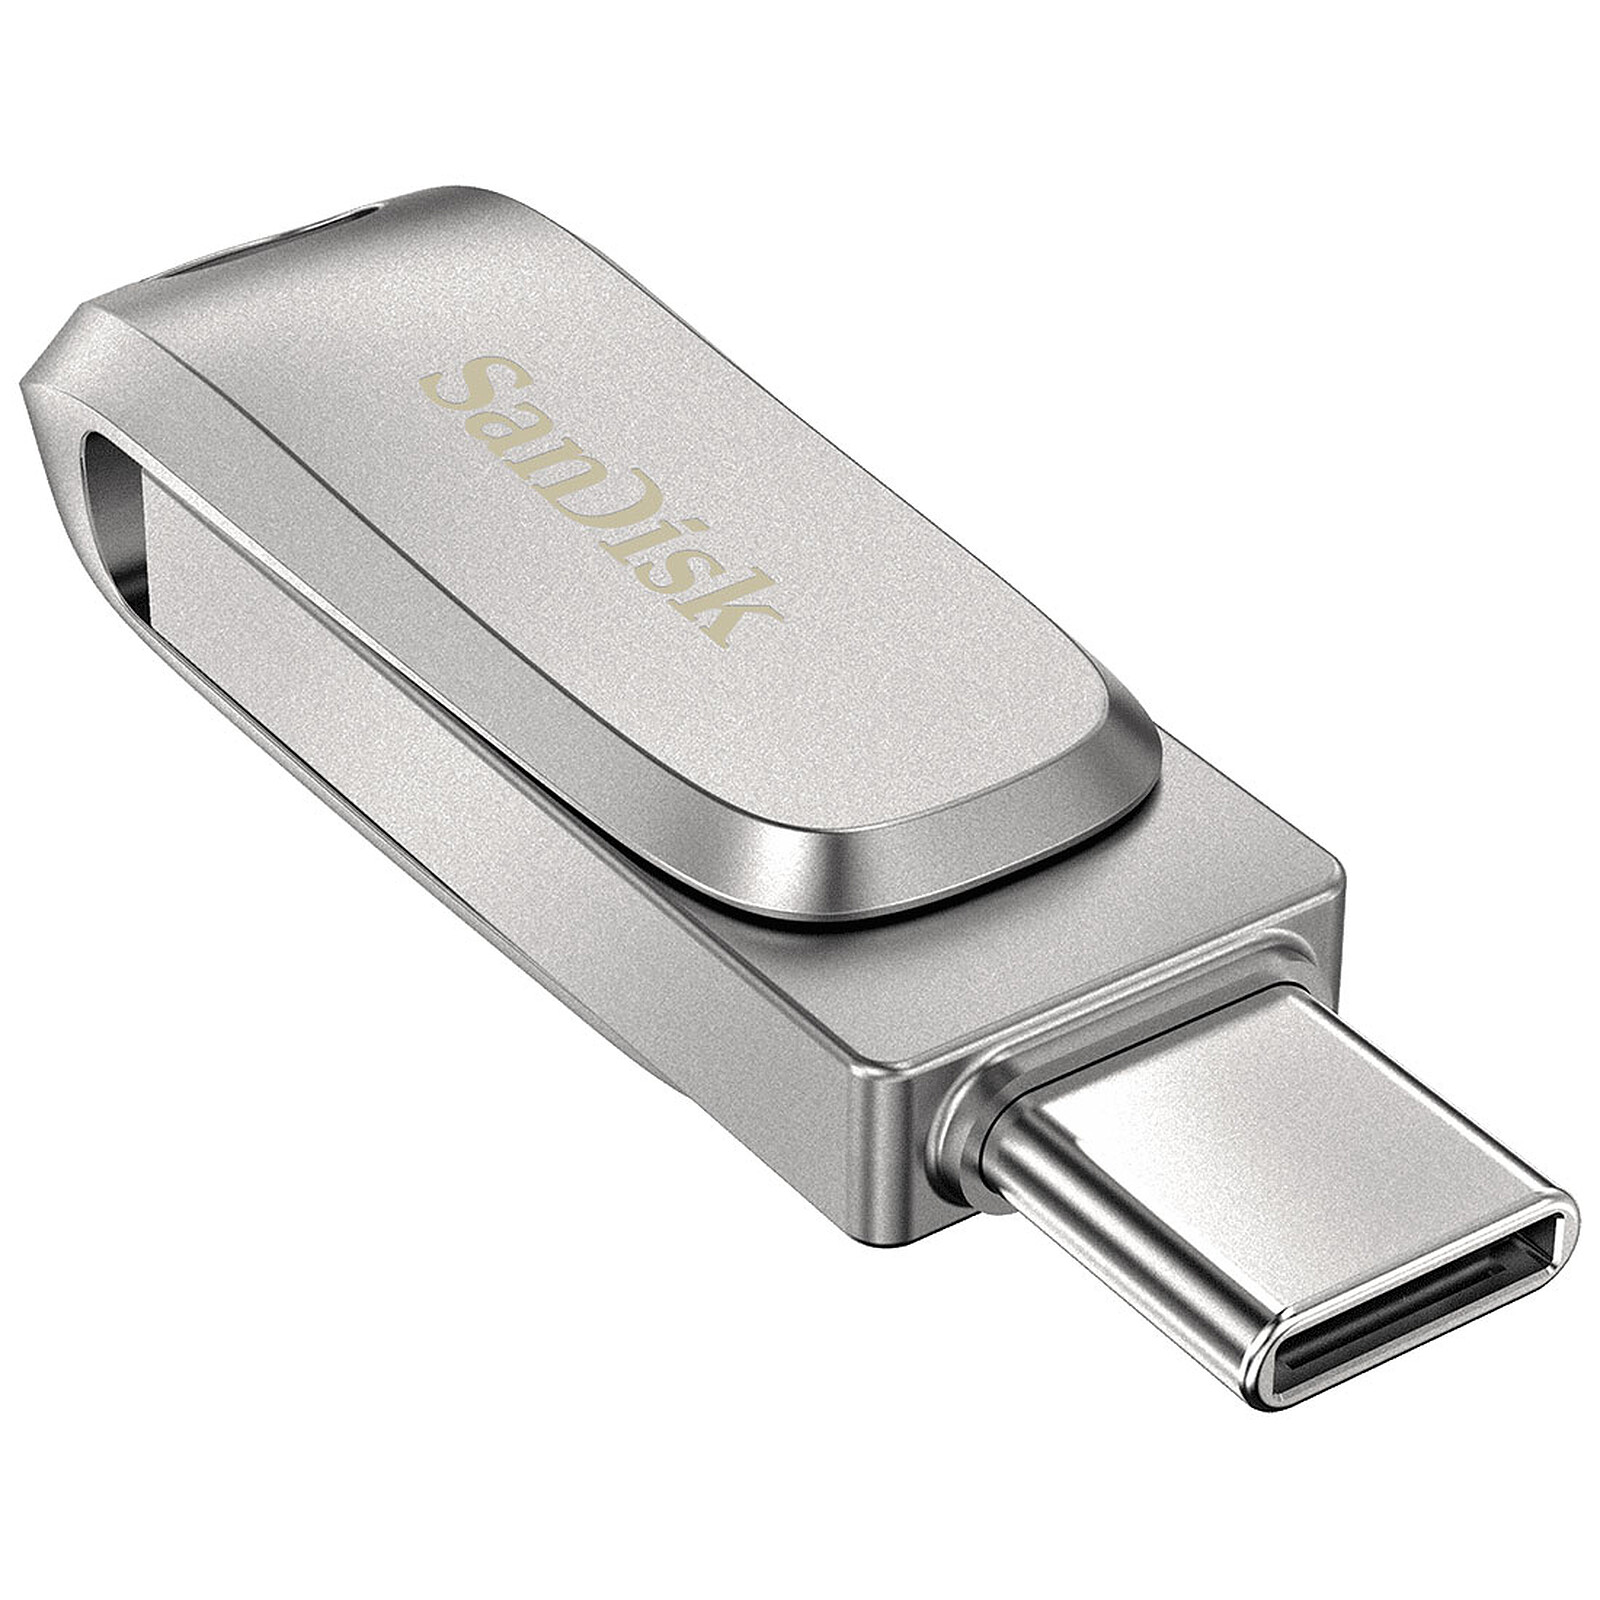 Clé USB 3.1 USB-C Sandisk Ultra Dual Drive Go 32Go 1 Stuk bij